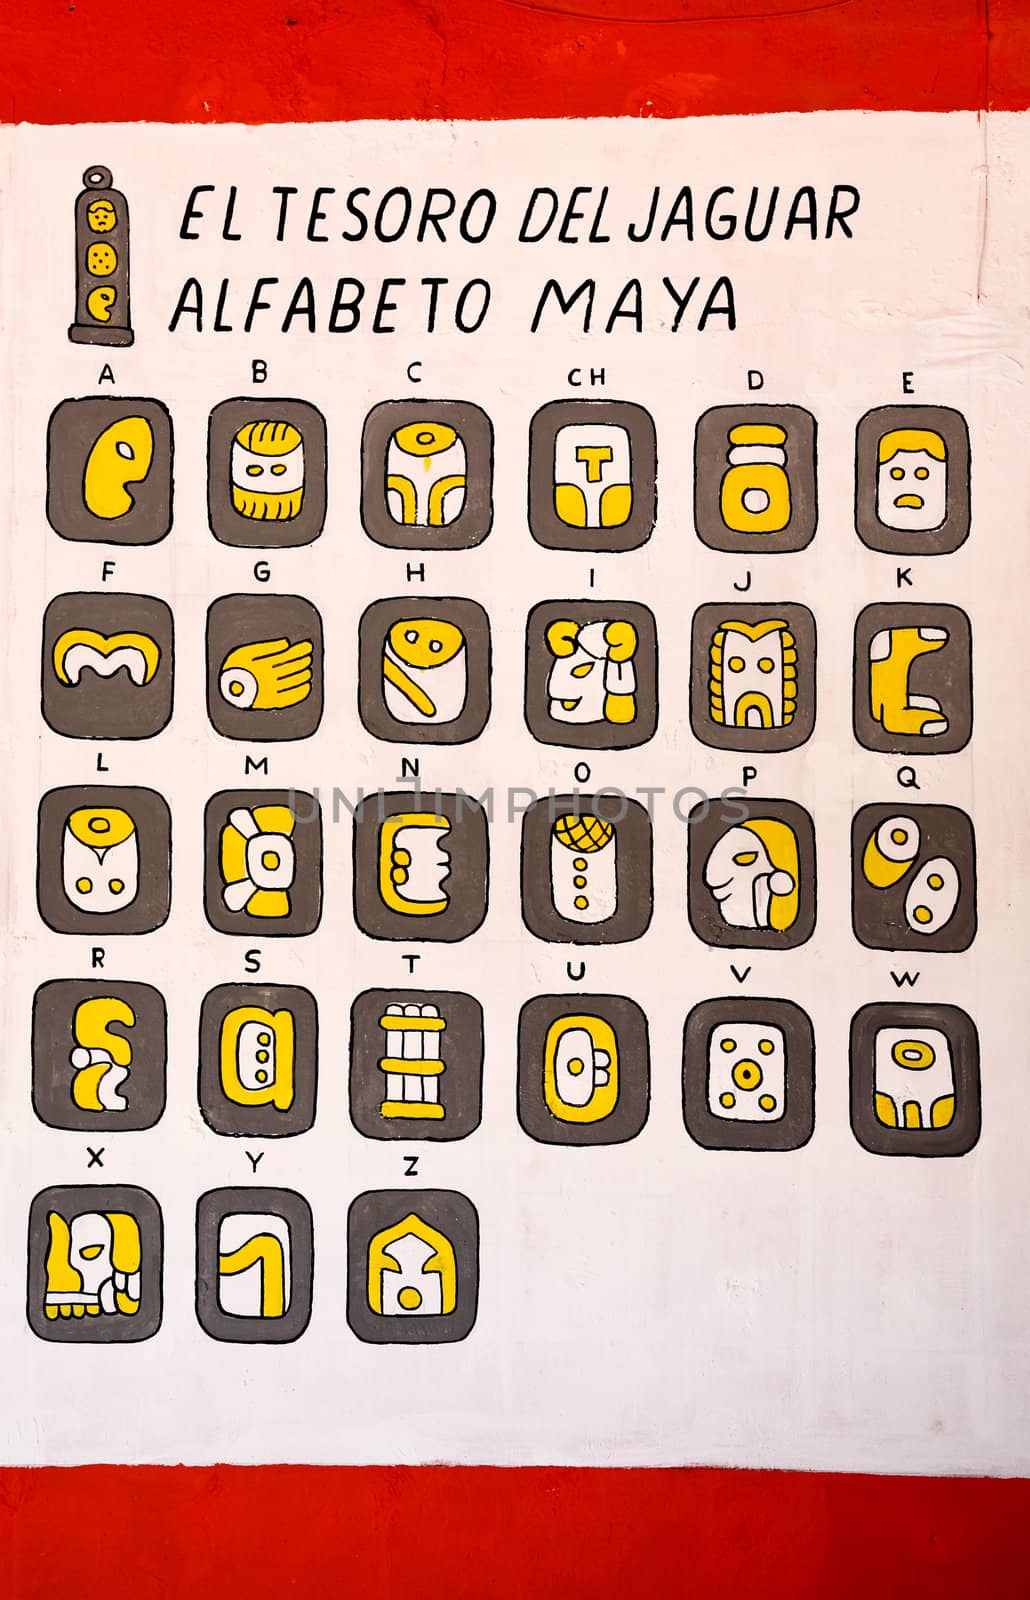 Mayan alphabets on the wall of a Mayan souvenir shop